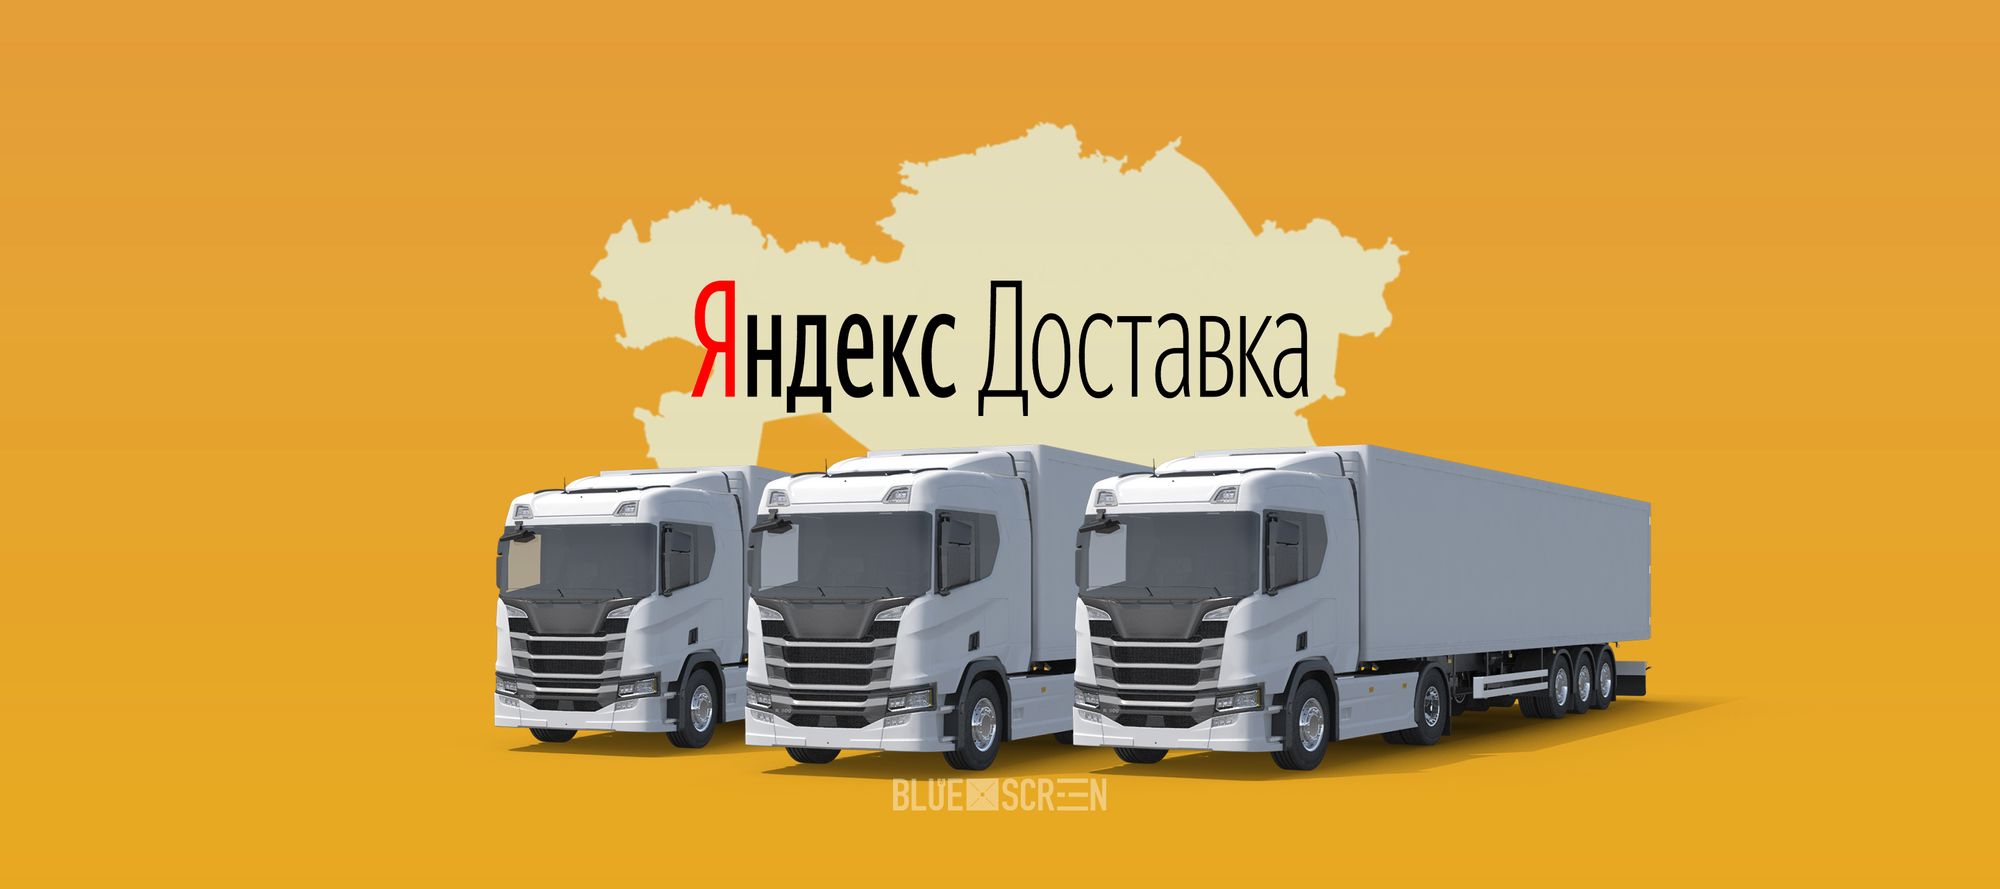 “Яндекс” запустил платформу по грузоперевозкам в Казахстане